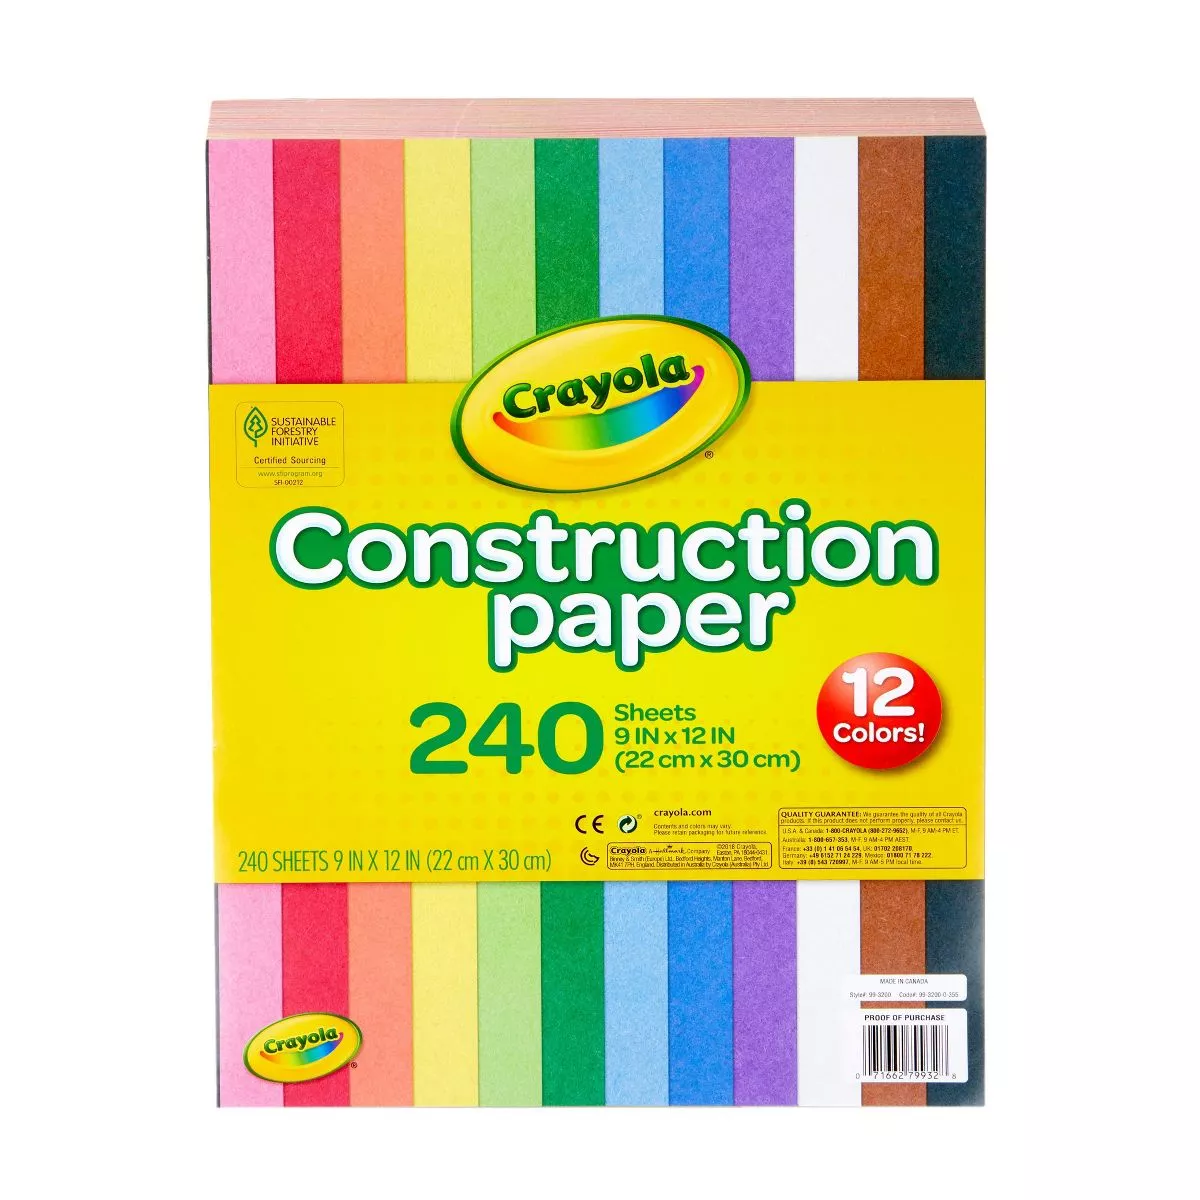 115pc Crayola Imagination Art Case Set w/ Crayons/Pencils/Markers